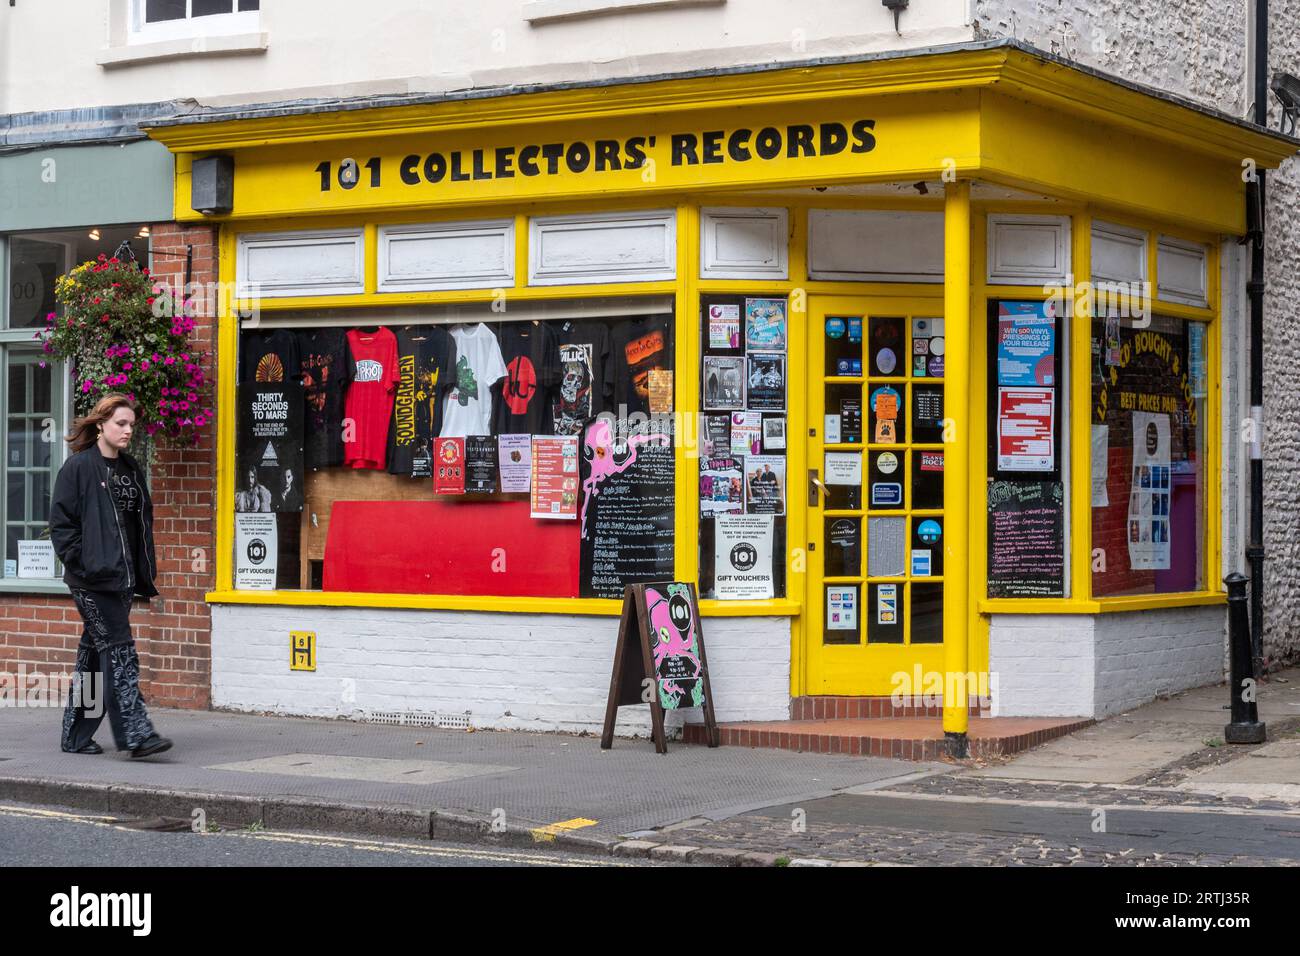 101 Collectors Records, music record shop in Farnham, Surrey, England, UK Stock Photo